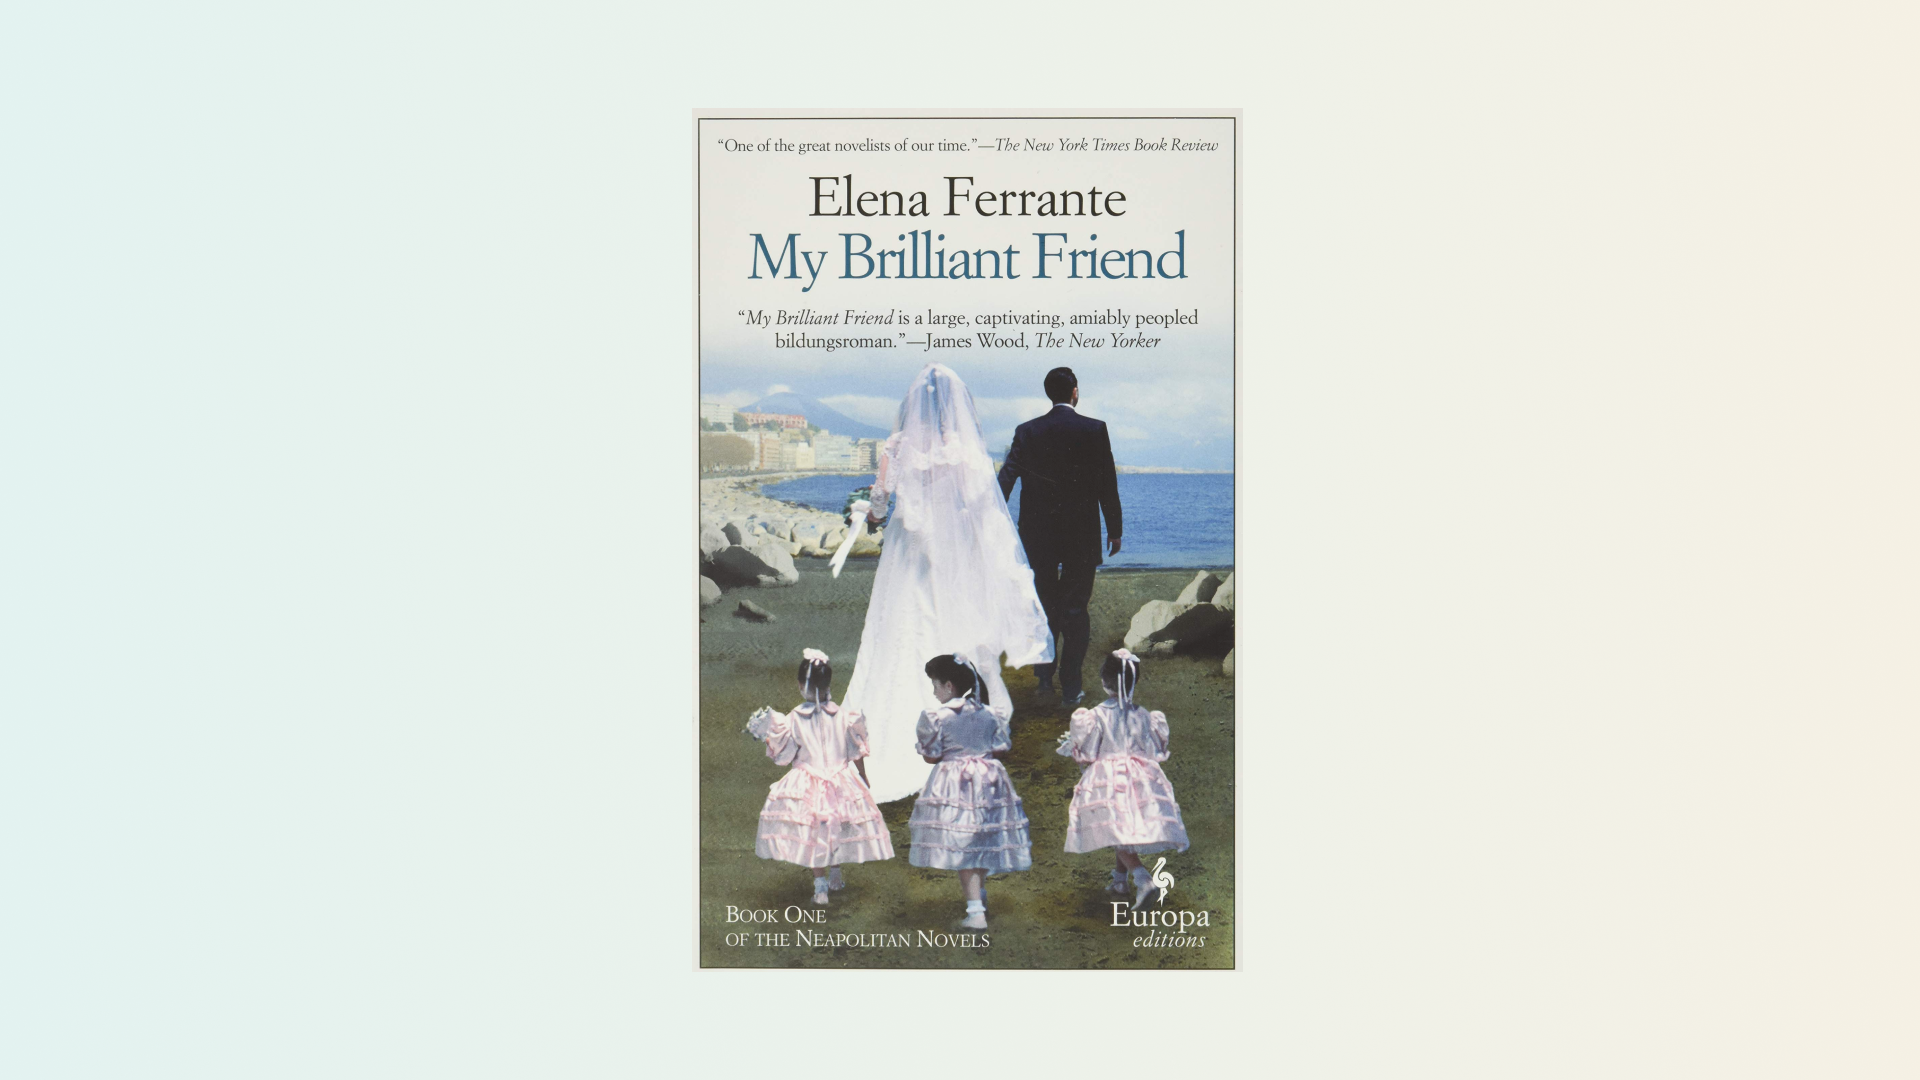 “The Neapolitan novels” by Elena Ferrante